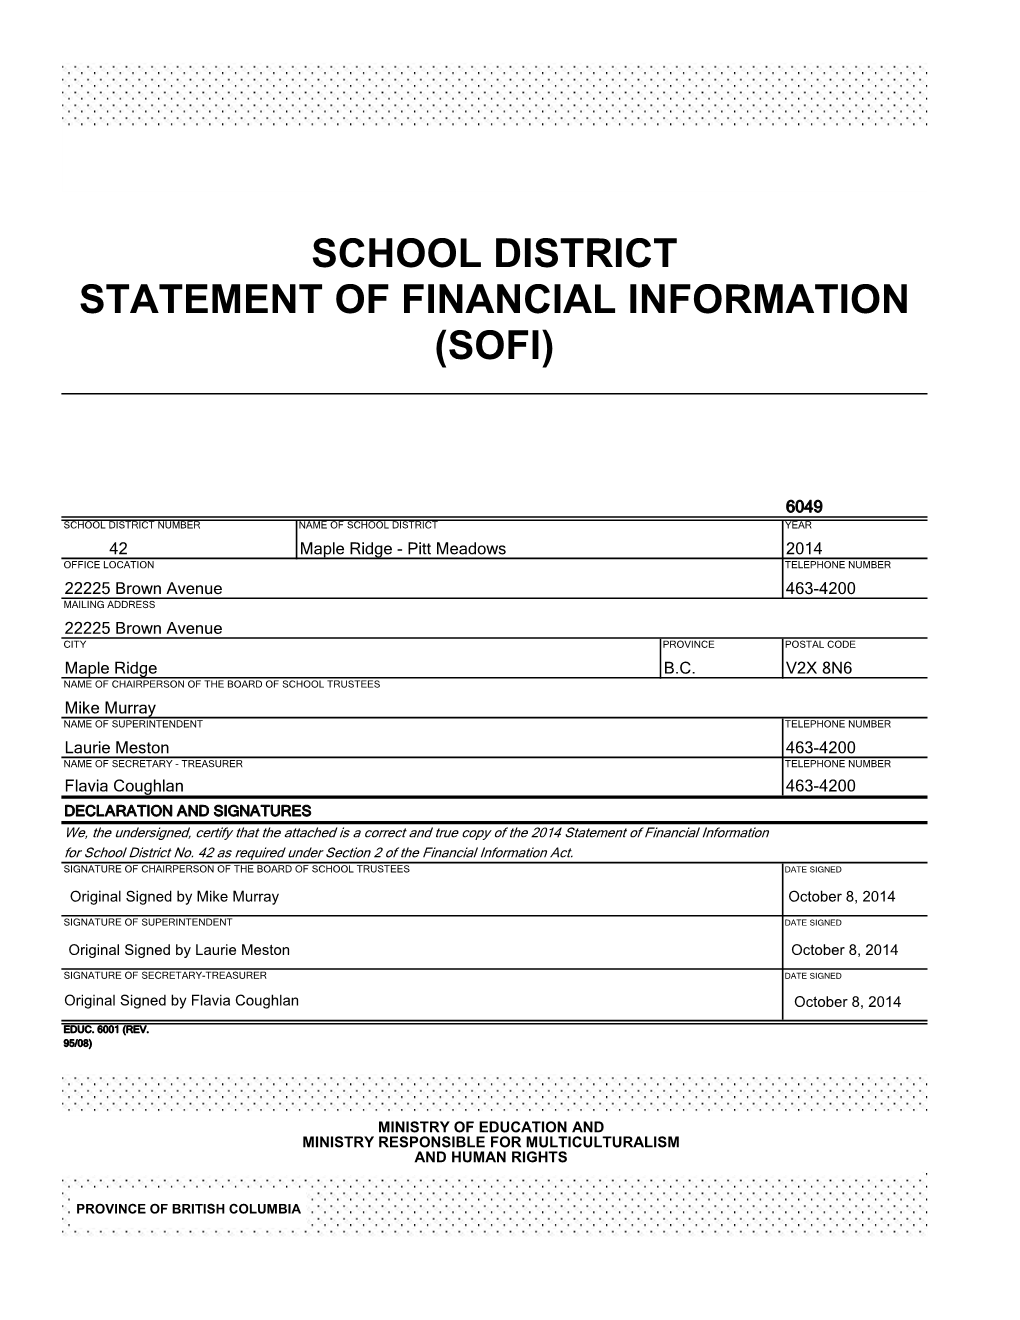 School District Statement of Financial Information (Sofi)